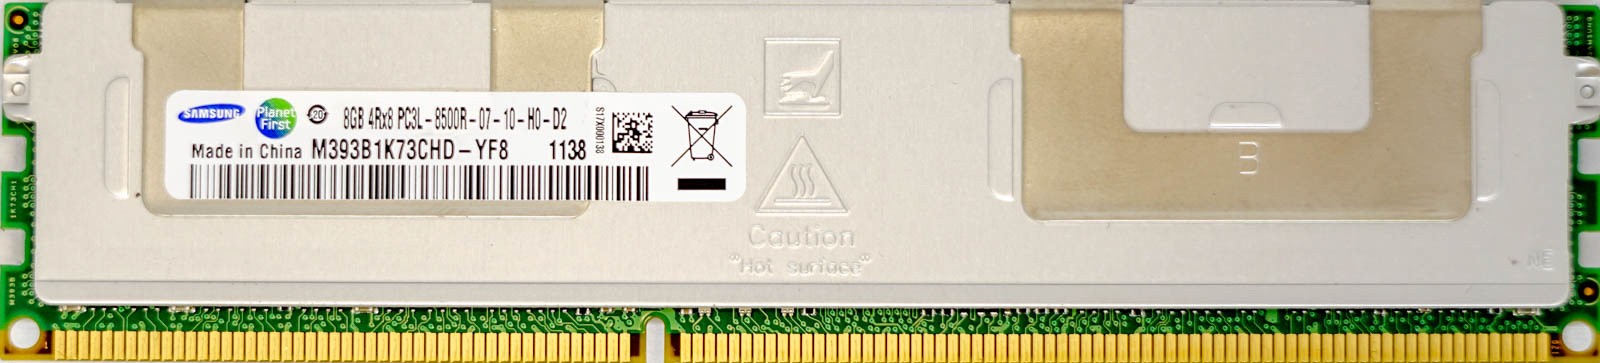 Samsung - 8GB PC3L-8500R (DDR3 Low-Power-1066Mhz, 4RX8)